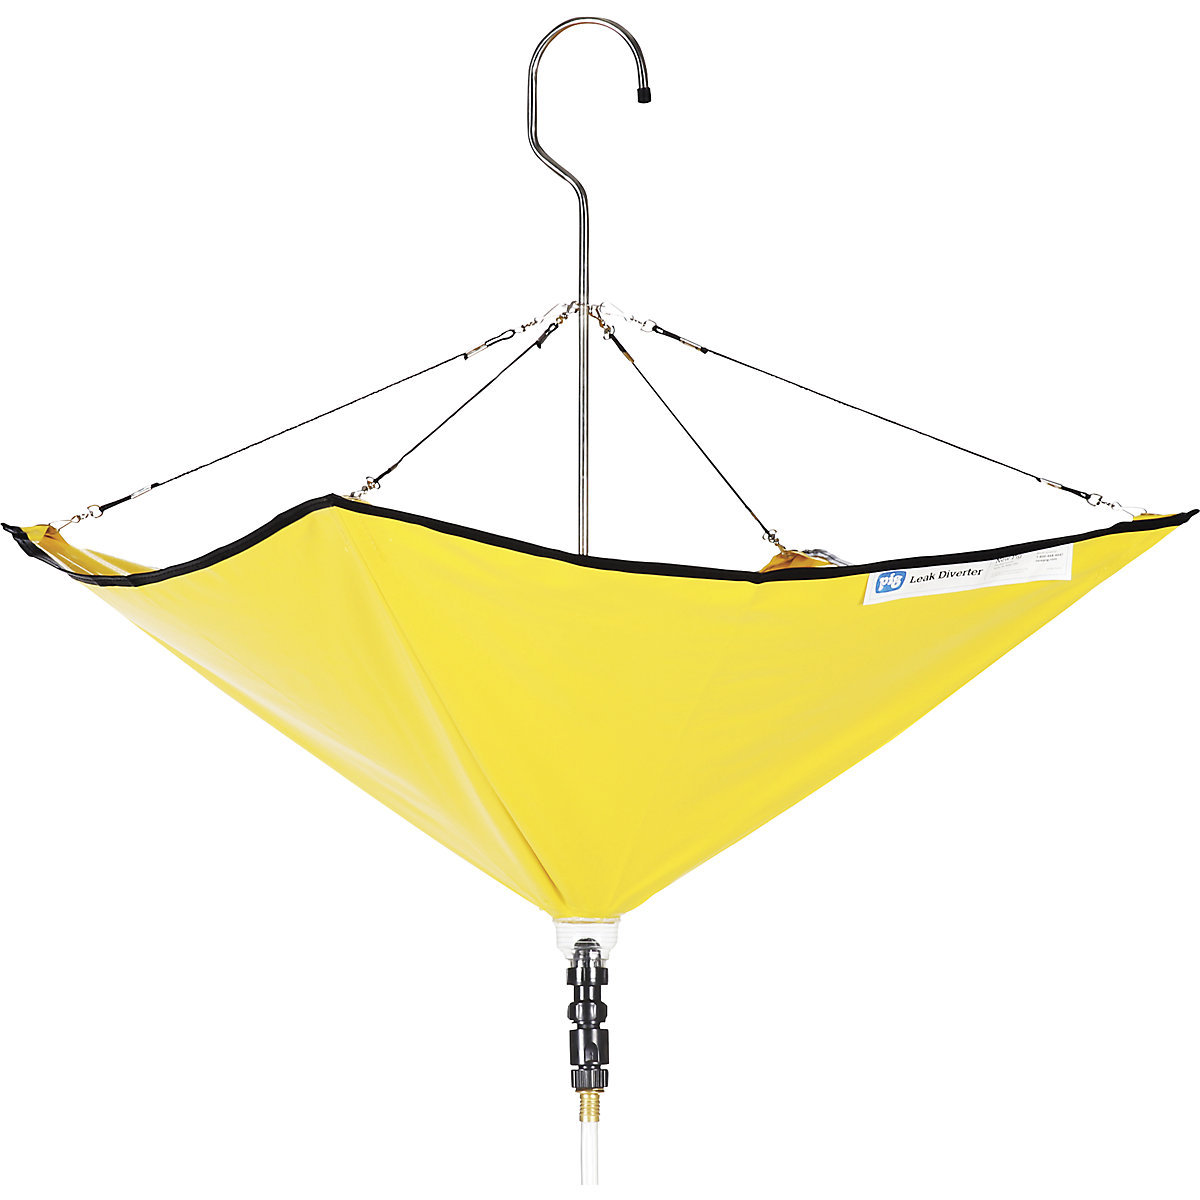 Parapluvormige lekkage-omleidingsset – PIG, b x h = 760 x 760 mm, geel-5